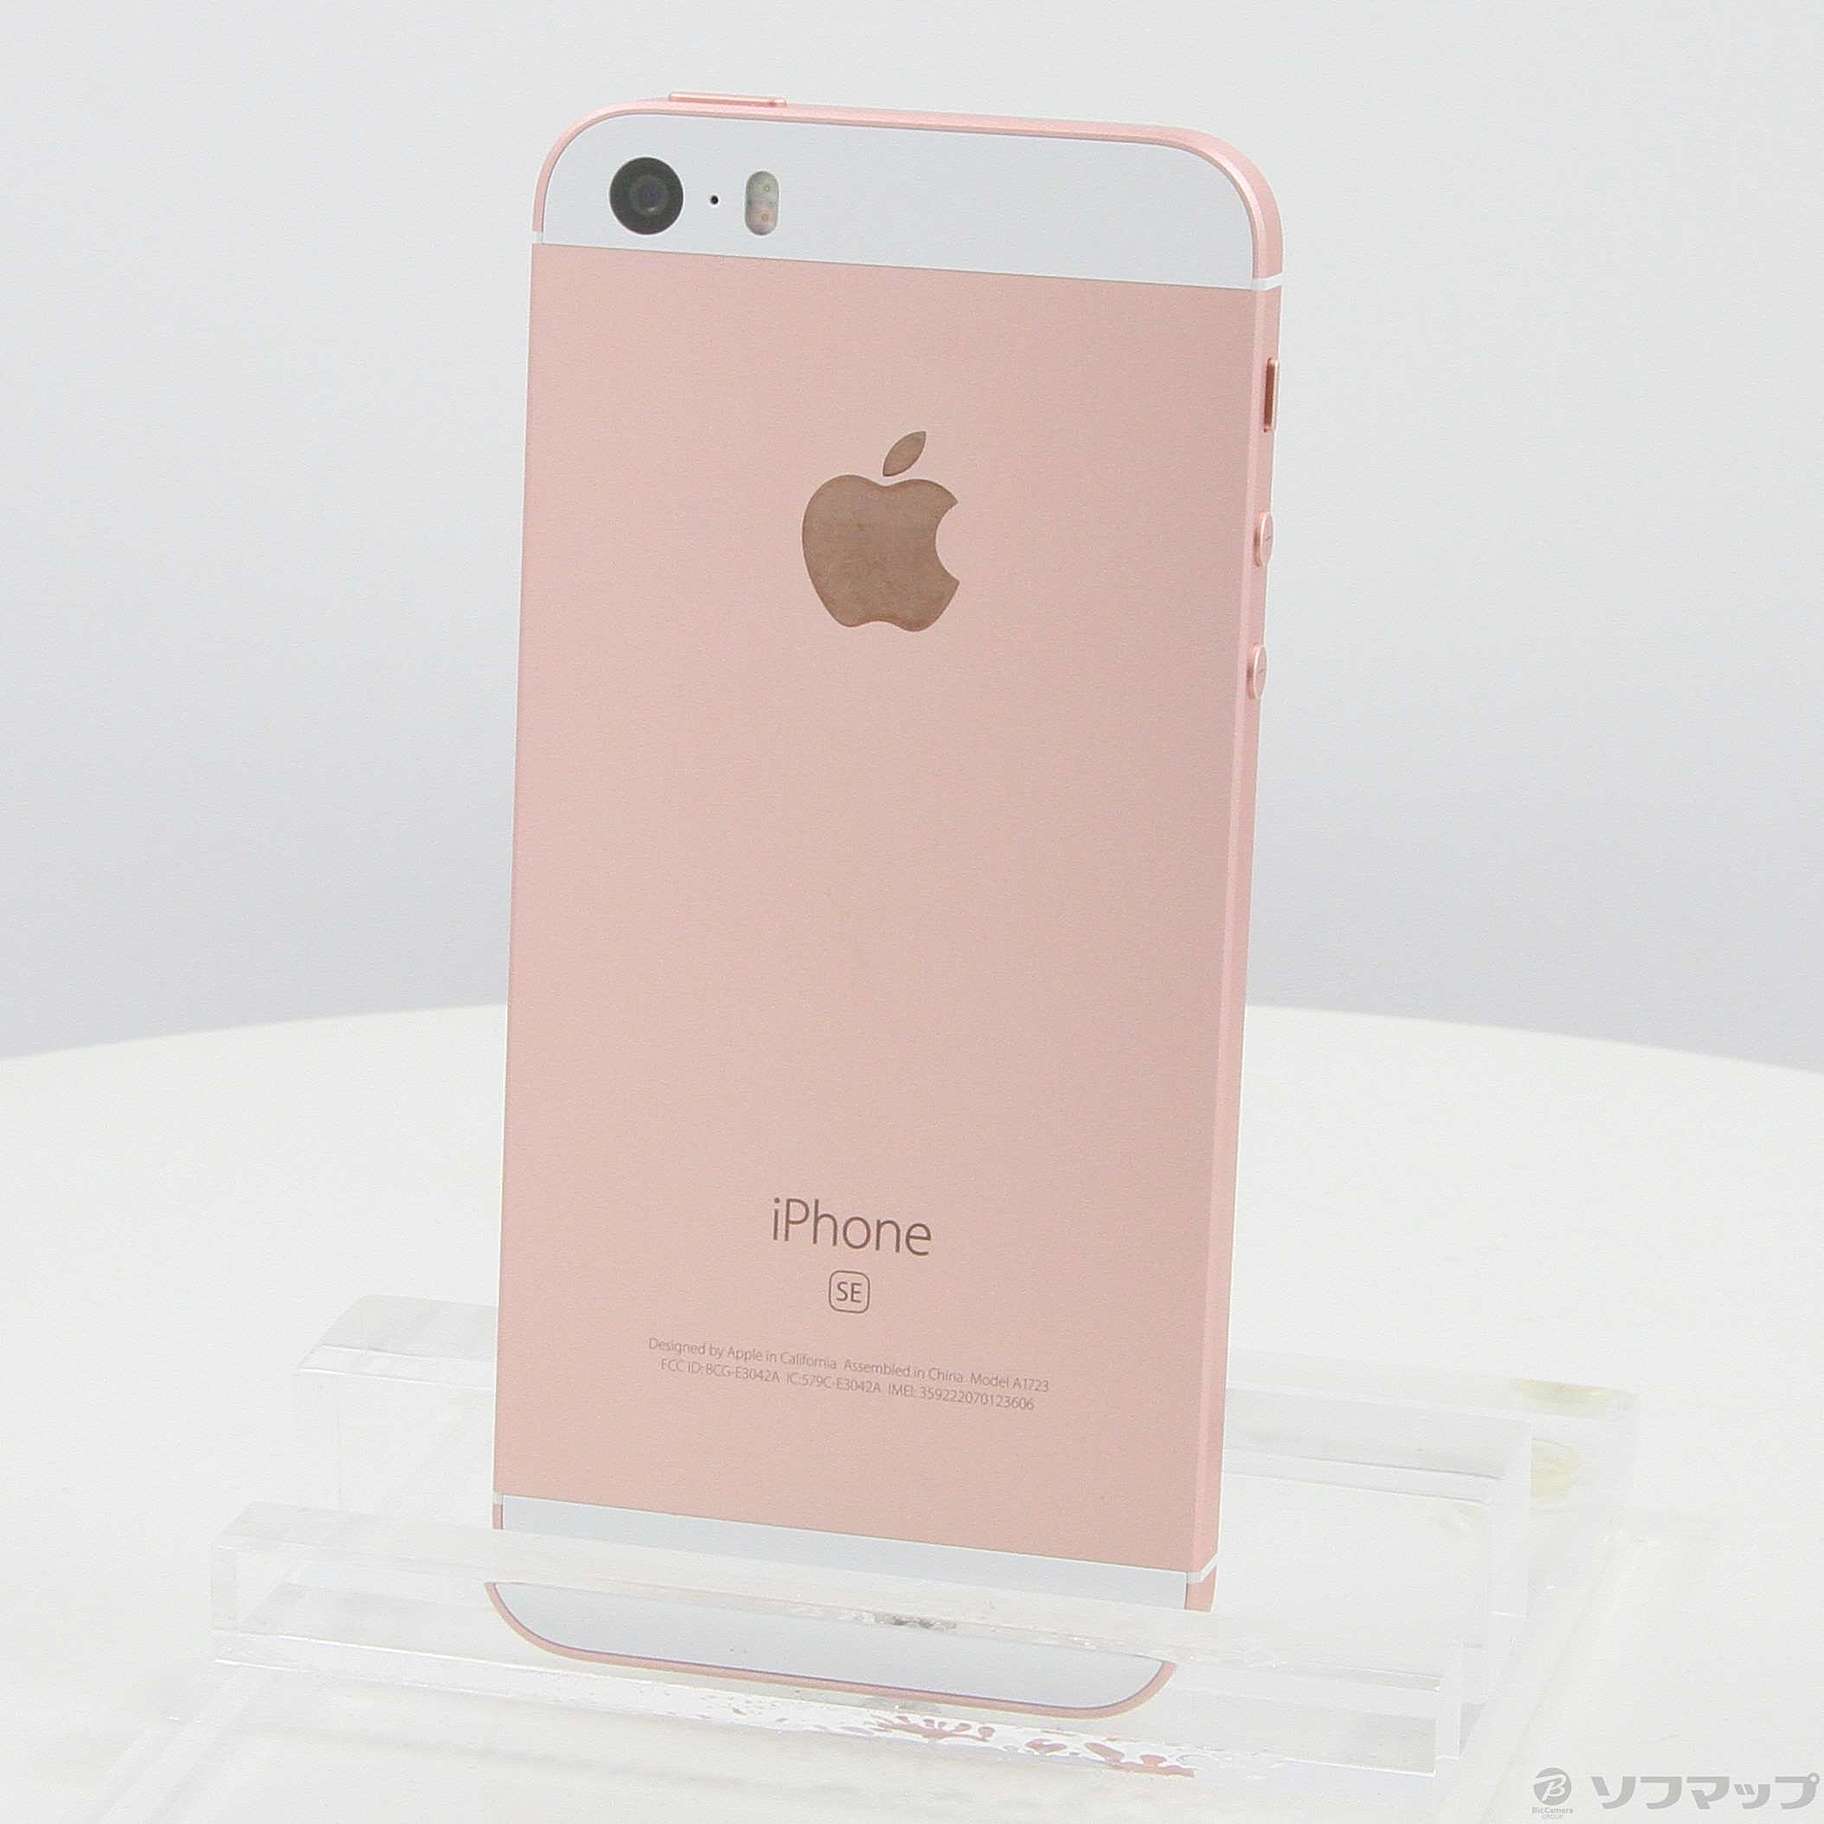 iPhone SE Rose Gold 16 GB SIMフリー - 携帯電話